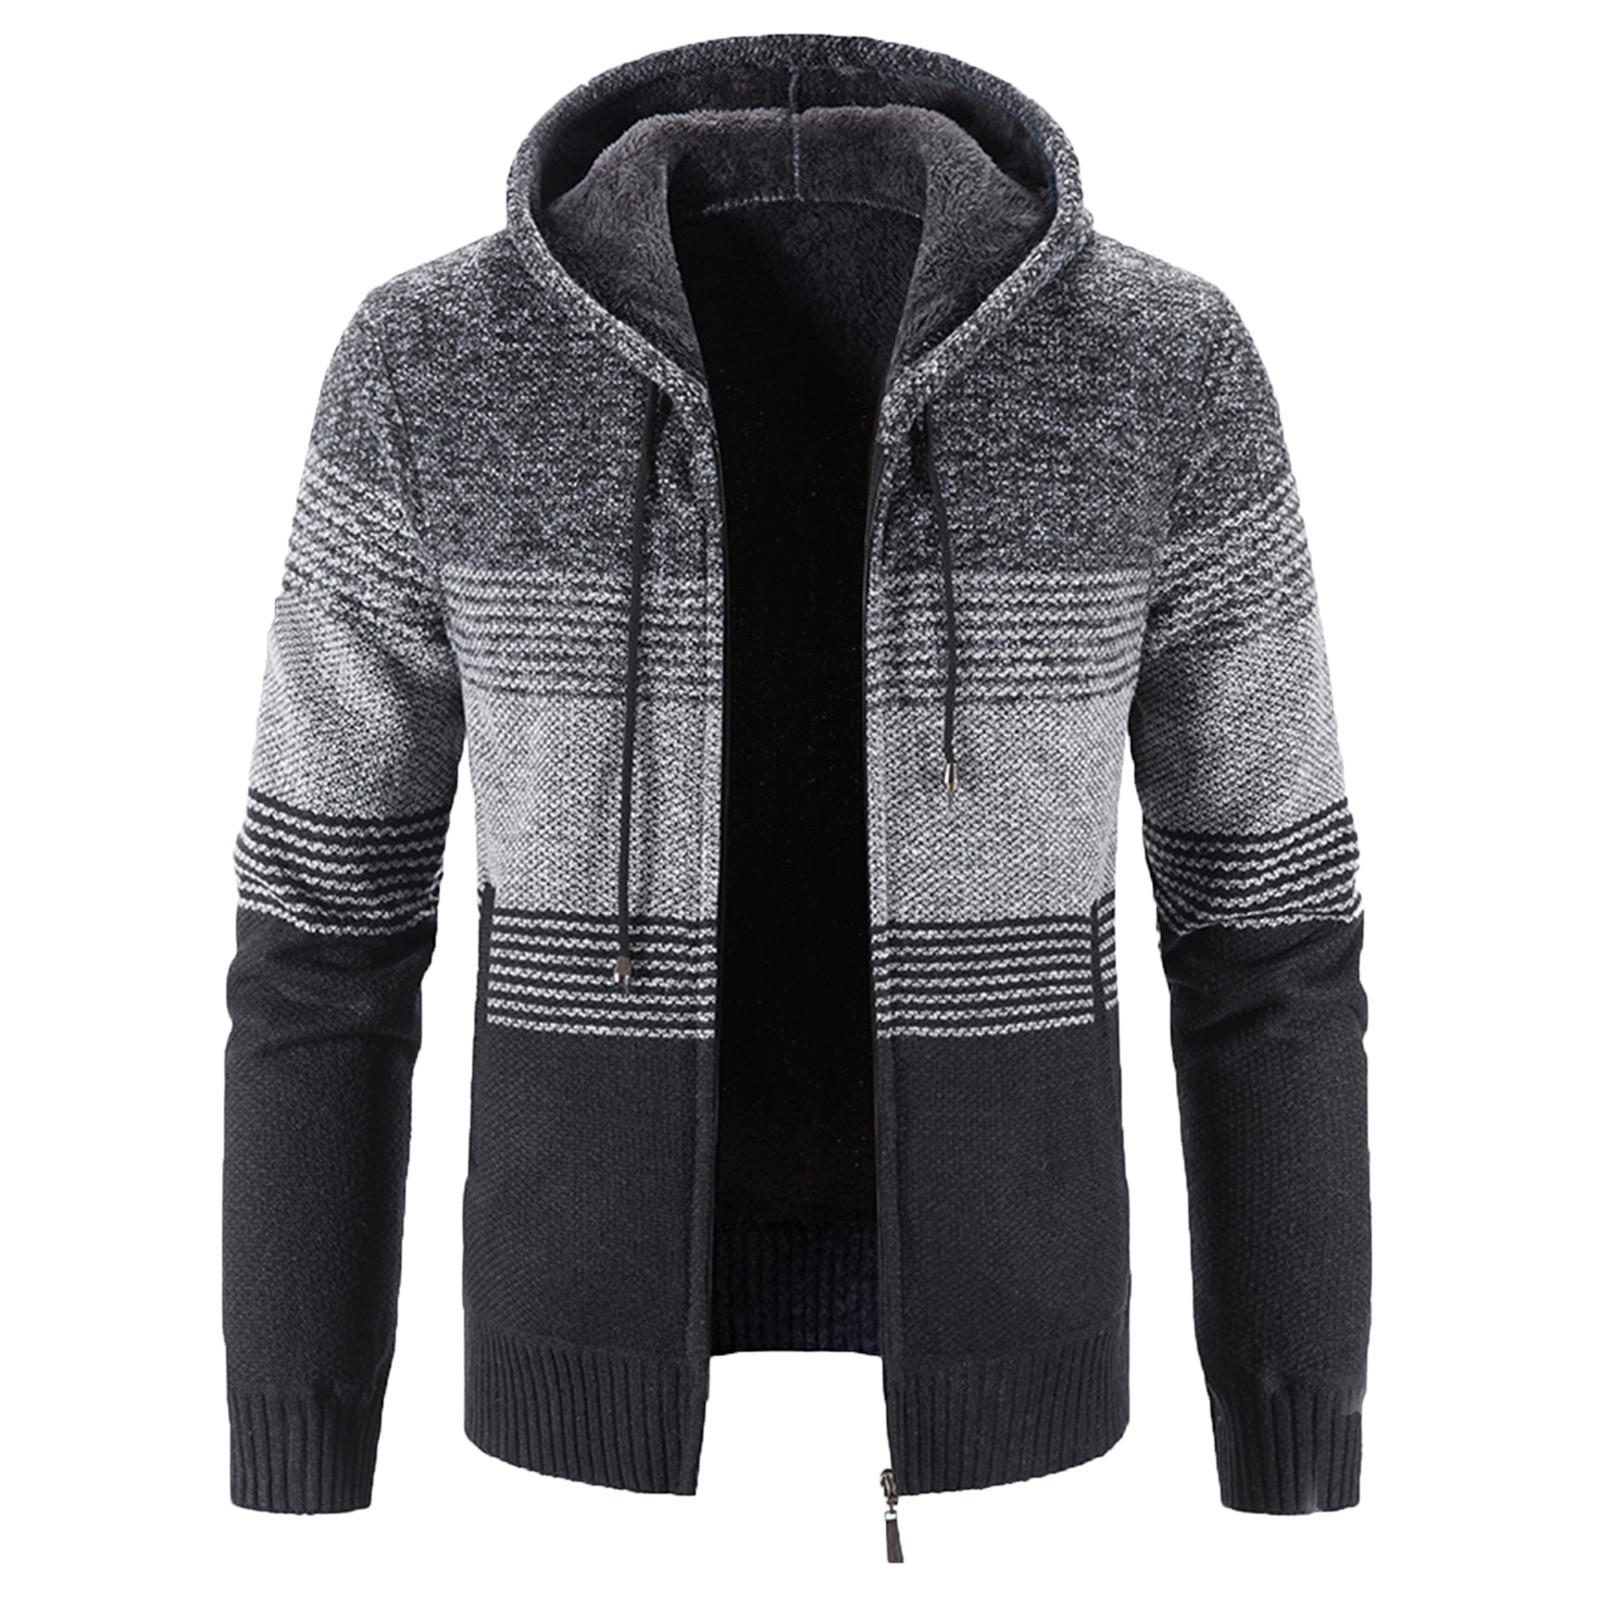 LEEy-world Light Winter Jackets for Men Men's Coats Winter Thicken Cotton Tactical Work Jackets with Hood Dark Gray,3XL - image 1 of 3